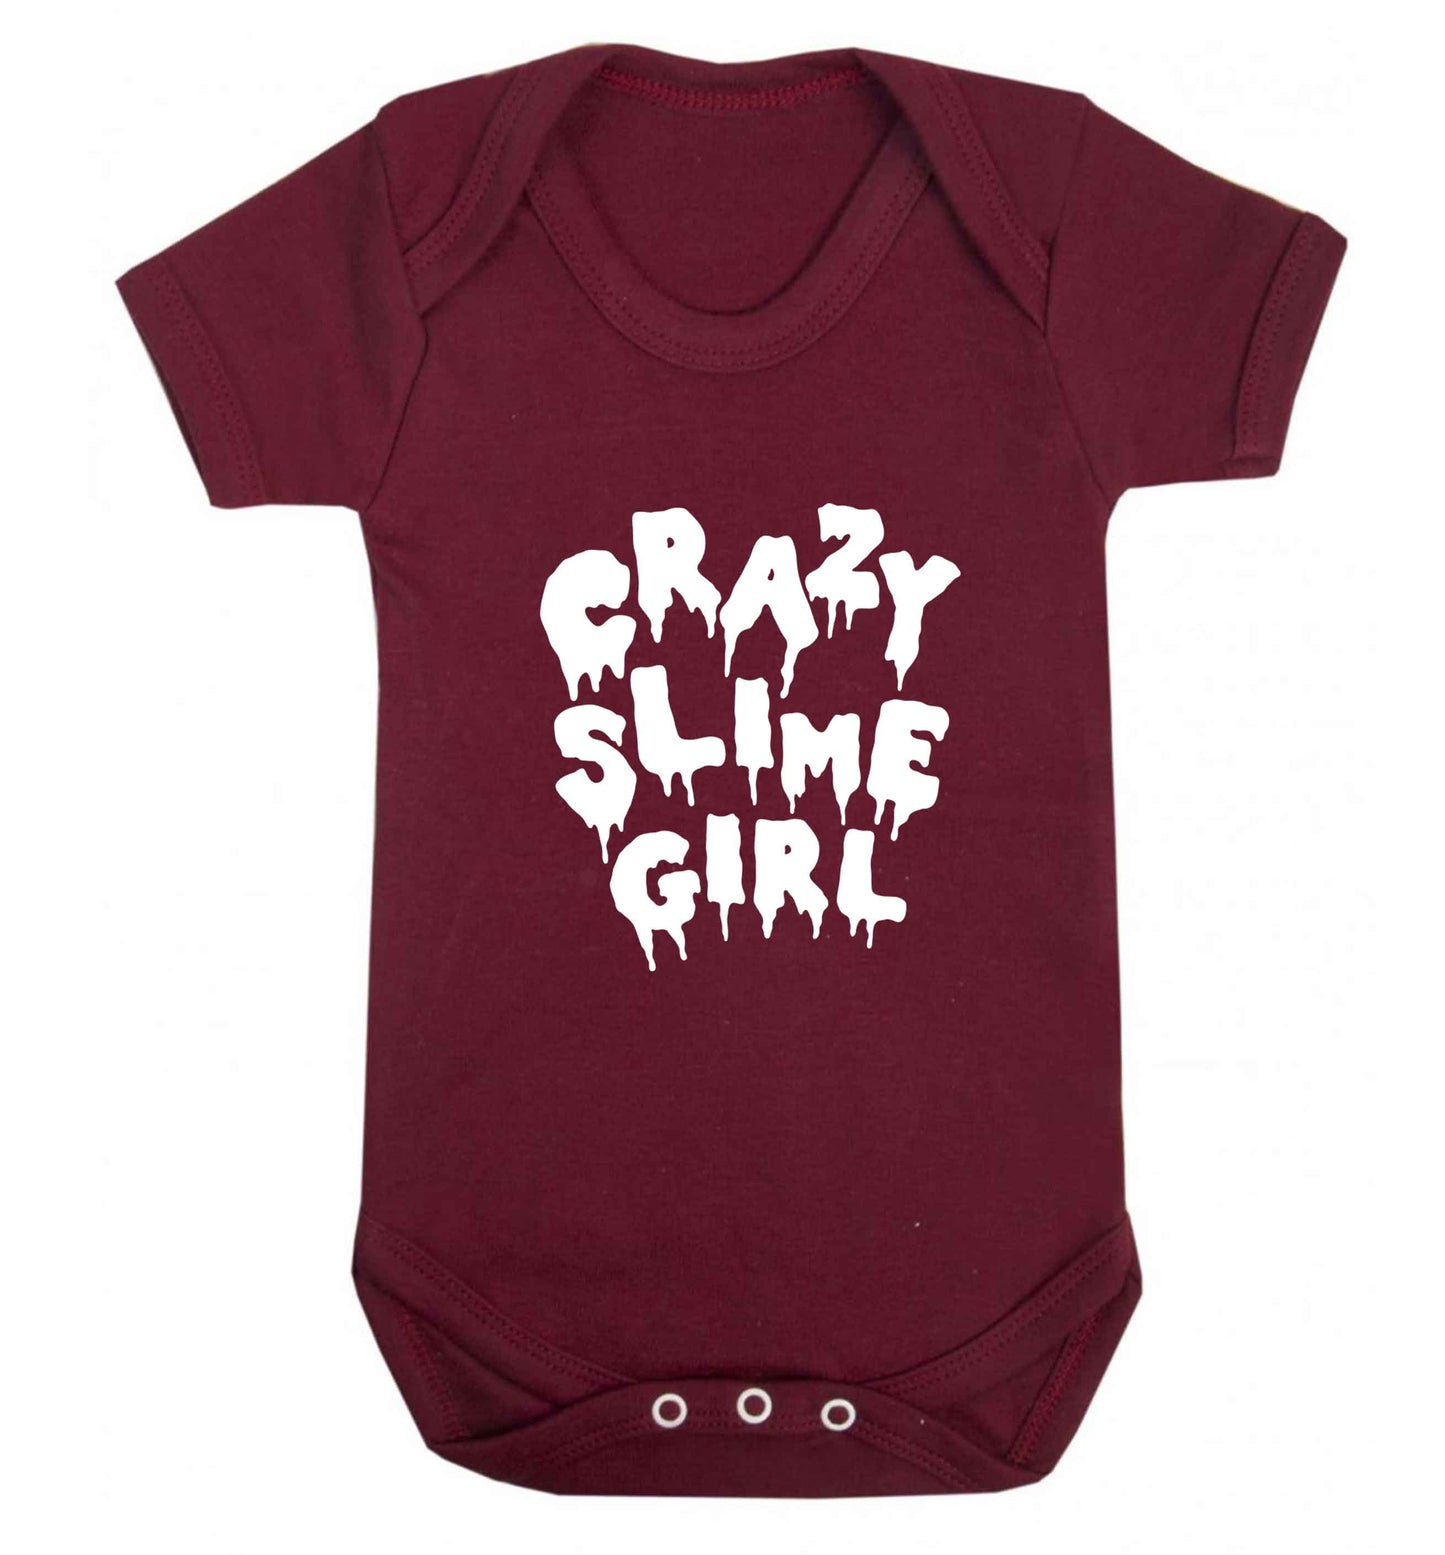 Crazy slime girl baby vest maroon 18-24 months